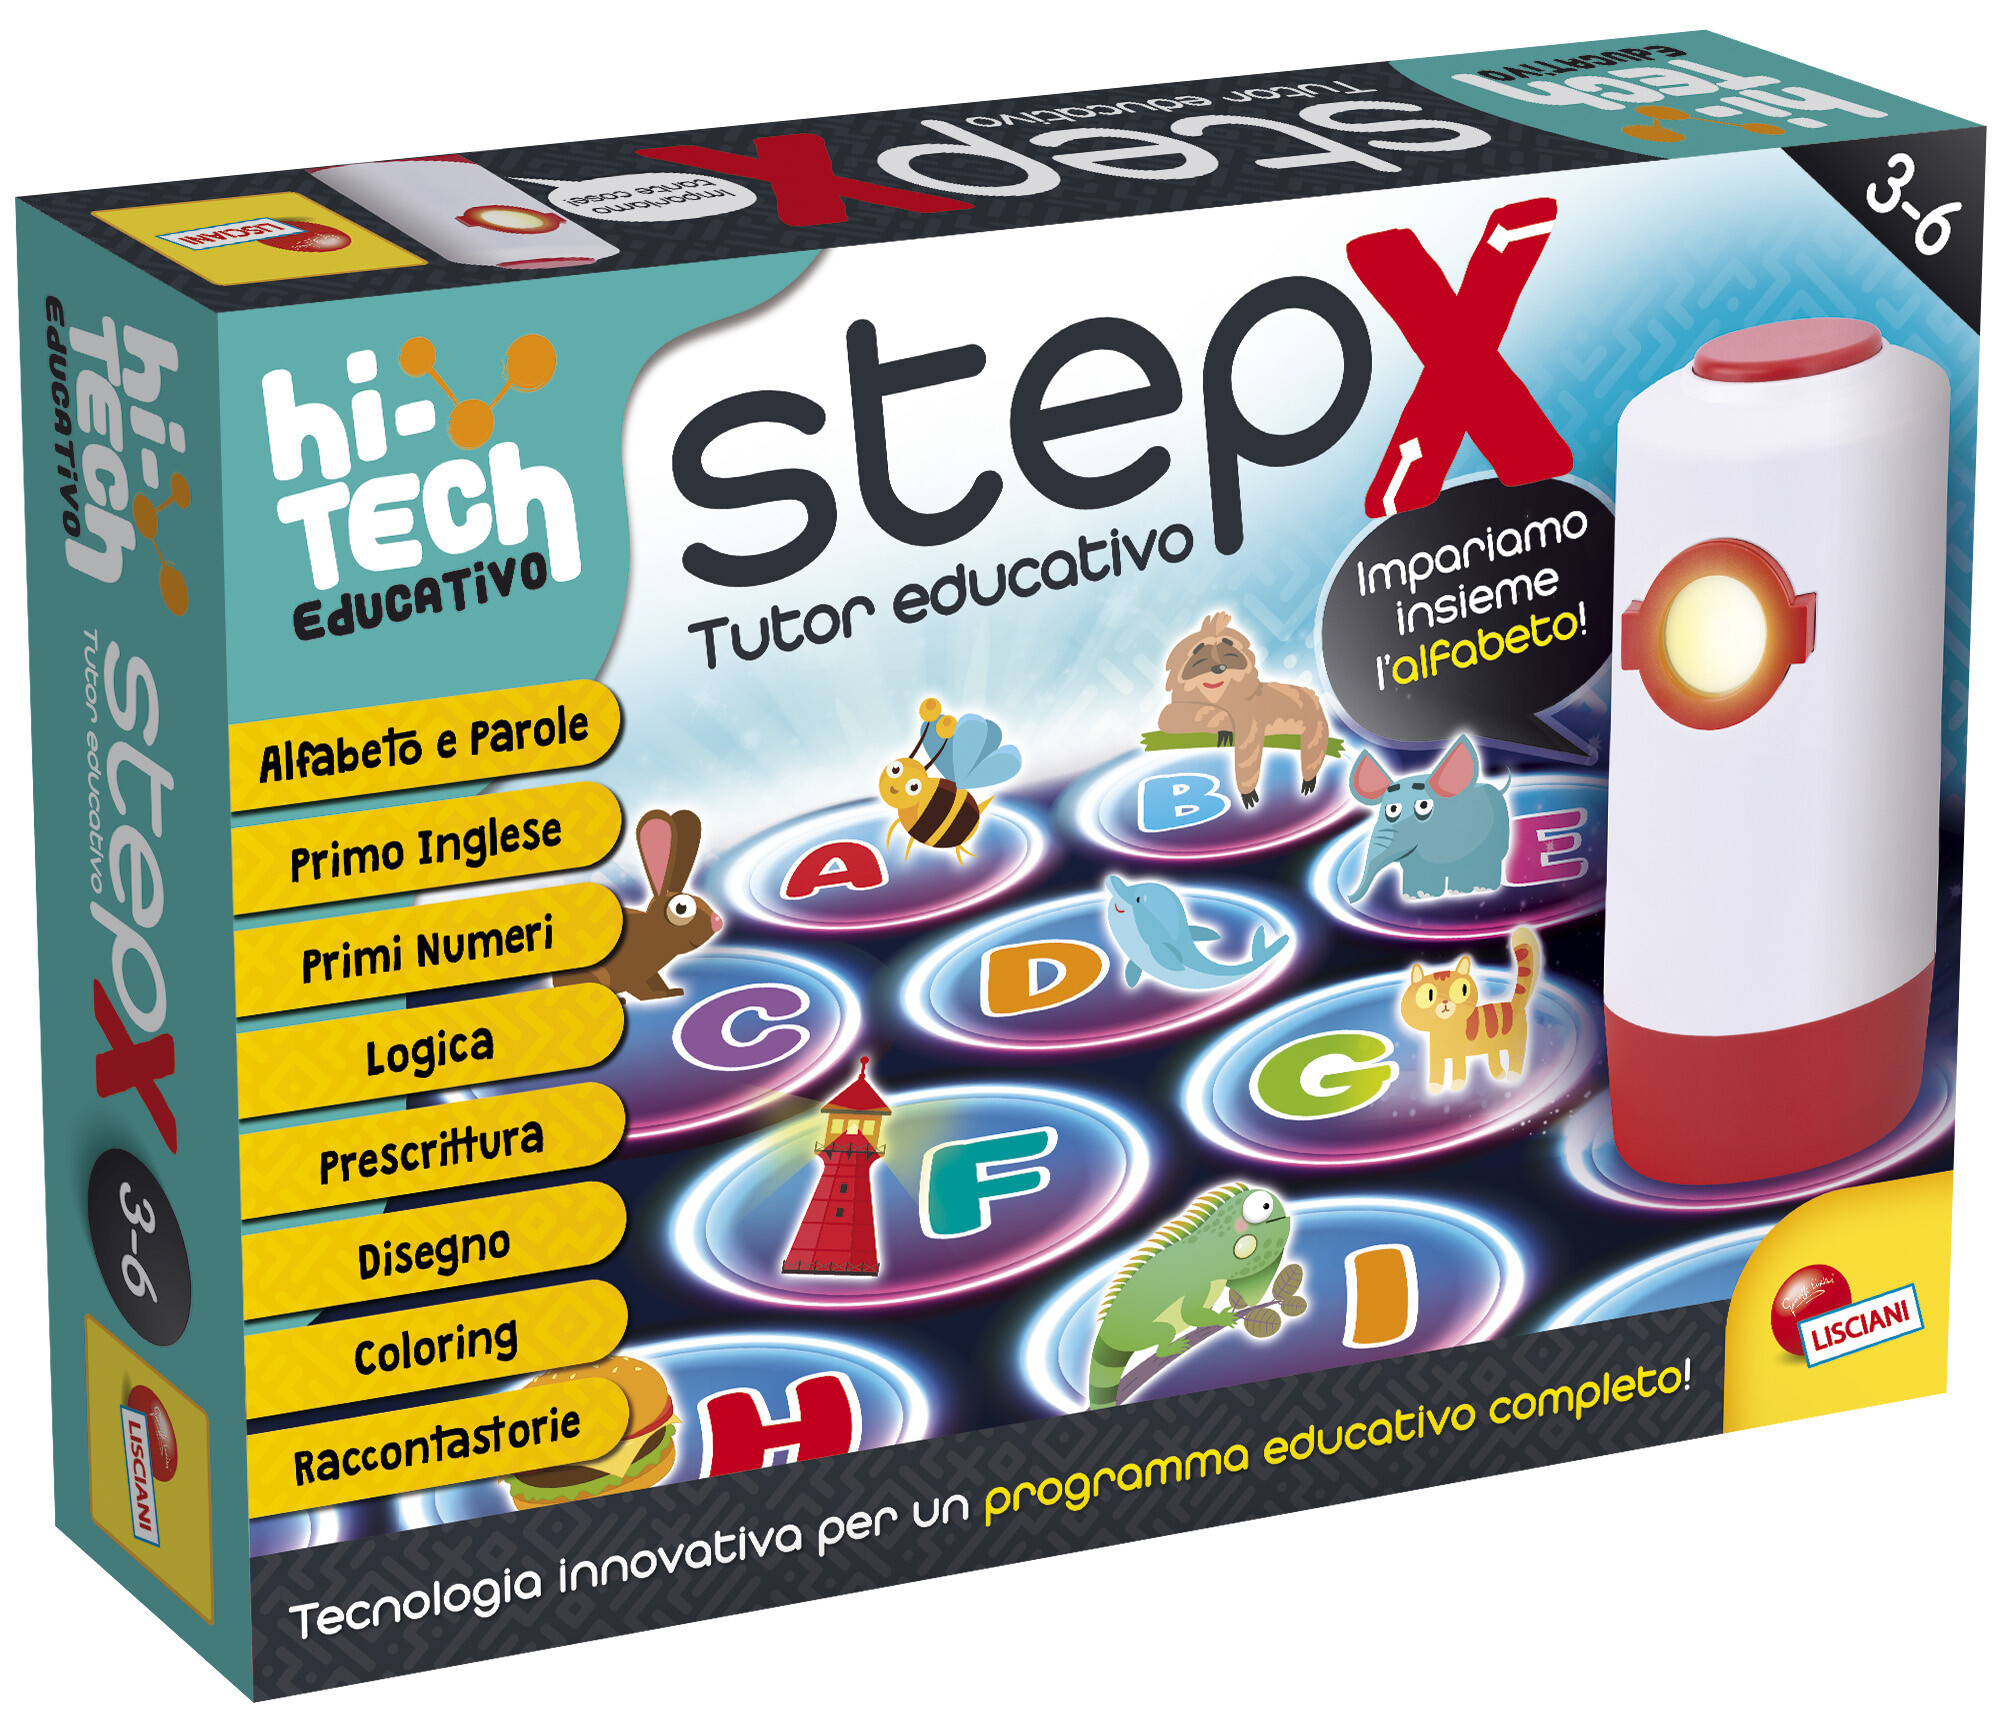 Step-x tutor educativo - LISCIANI